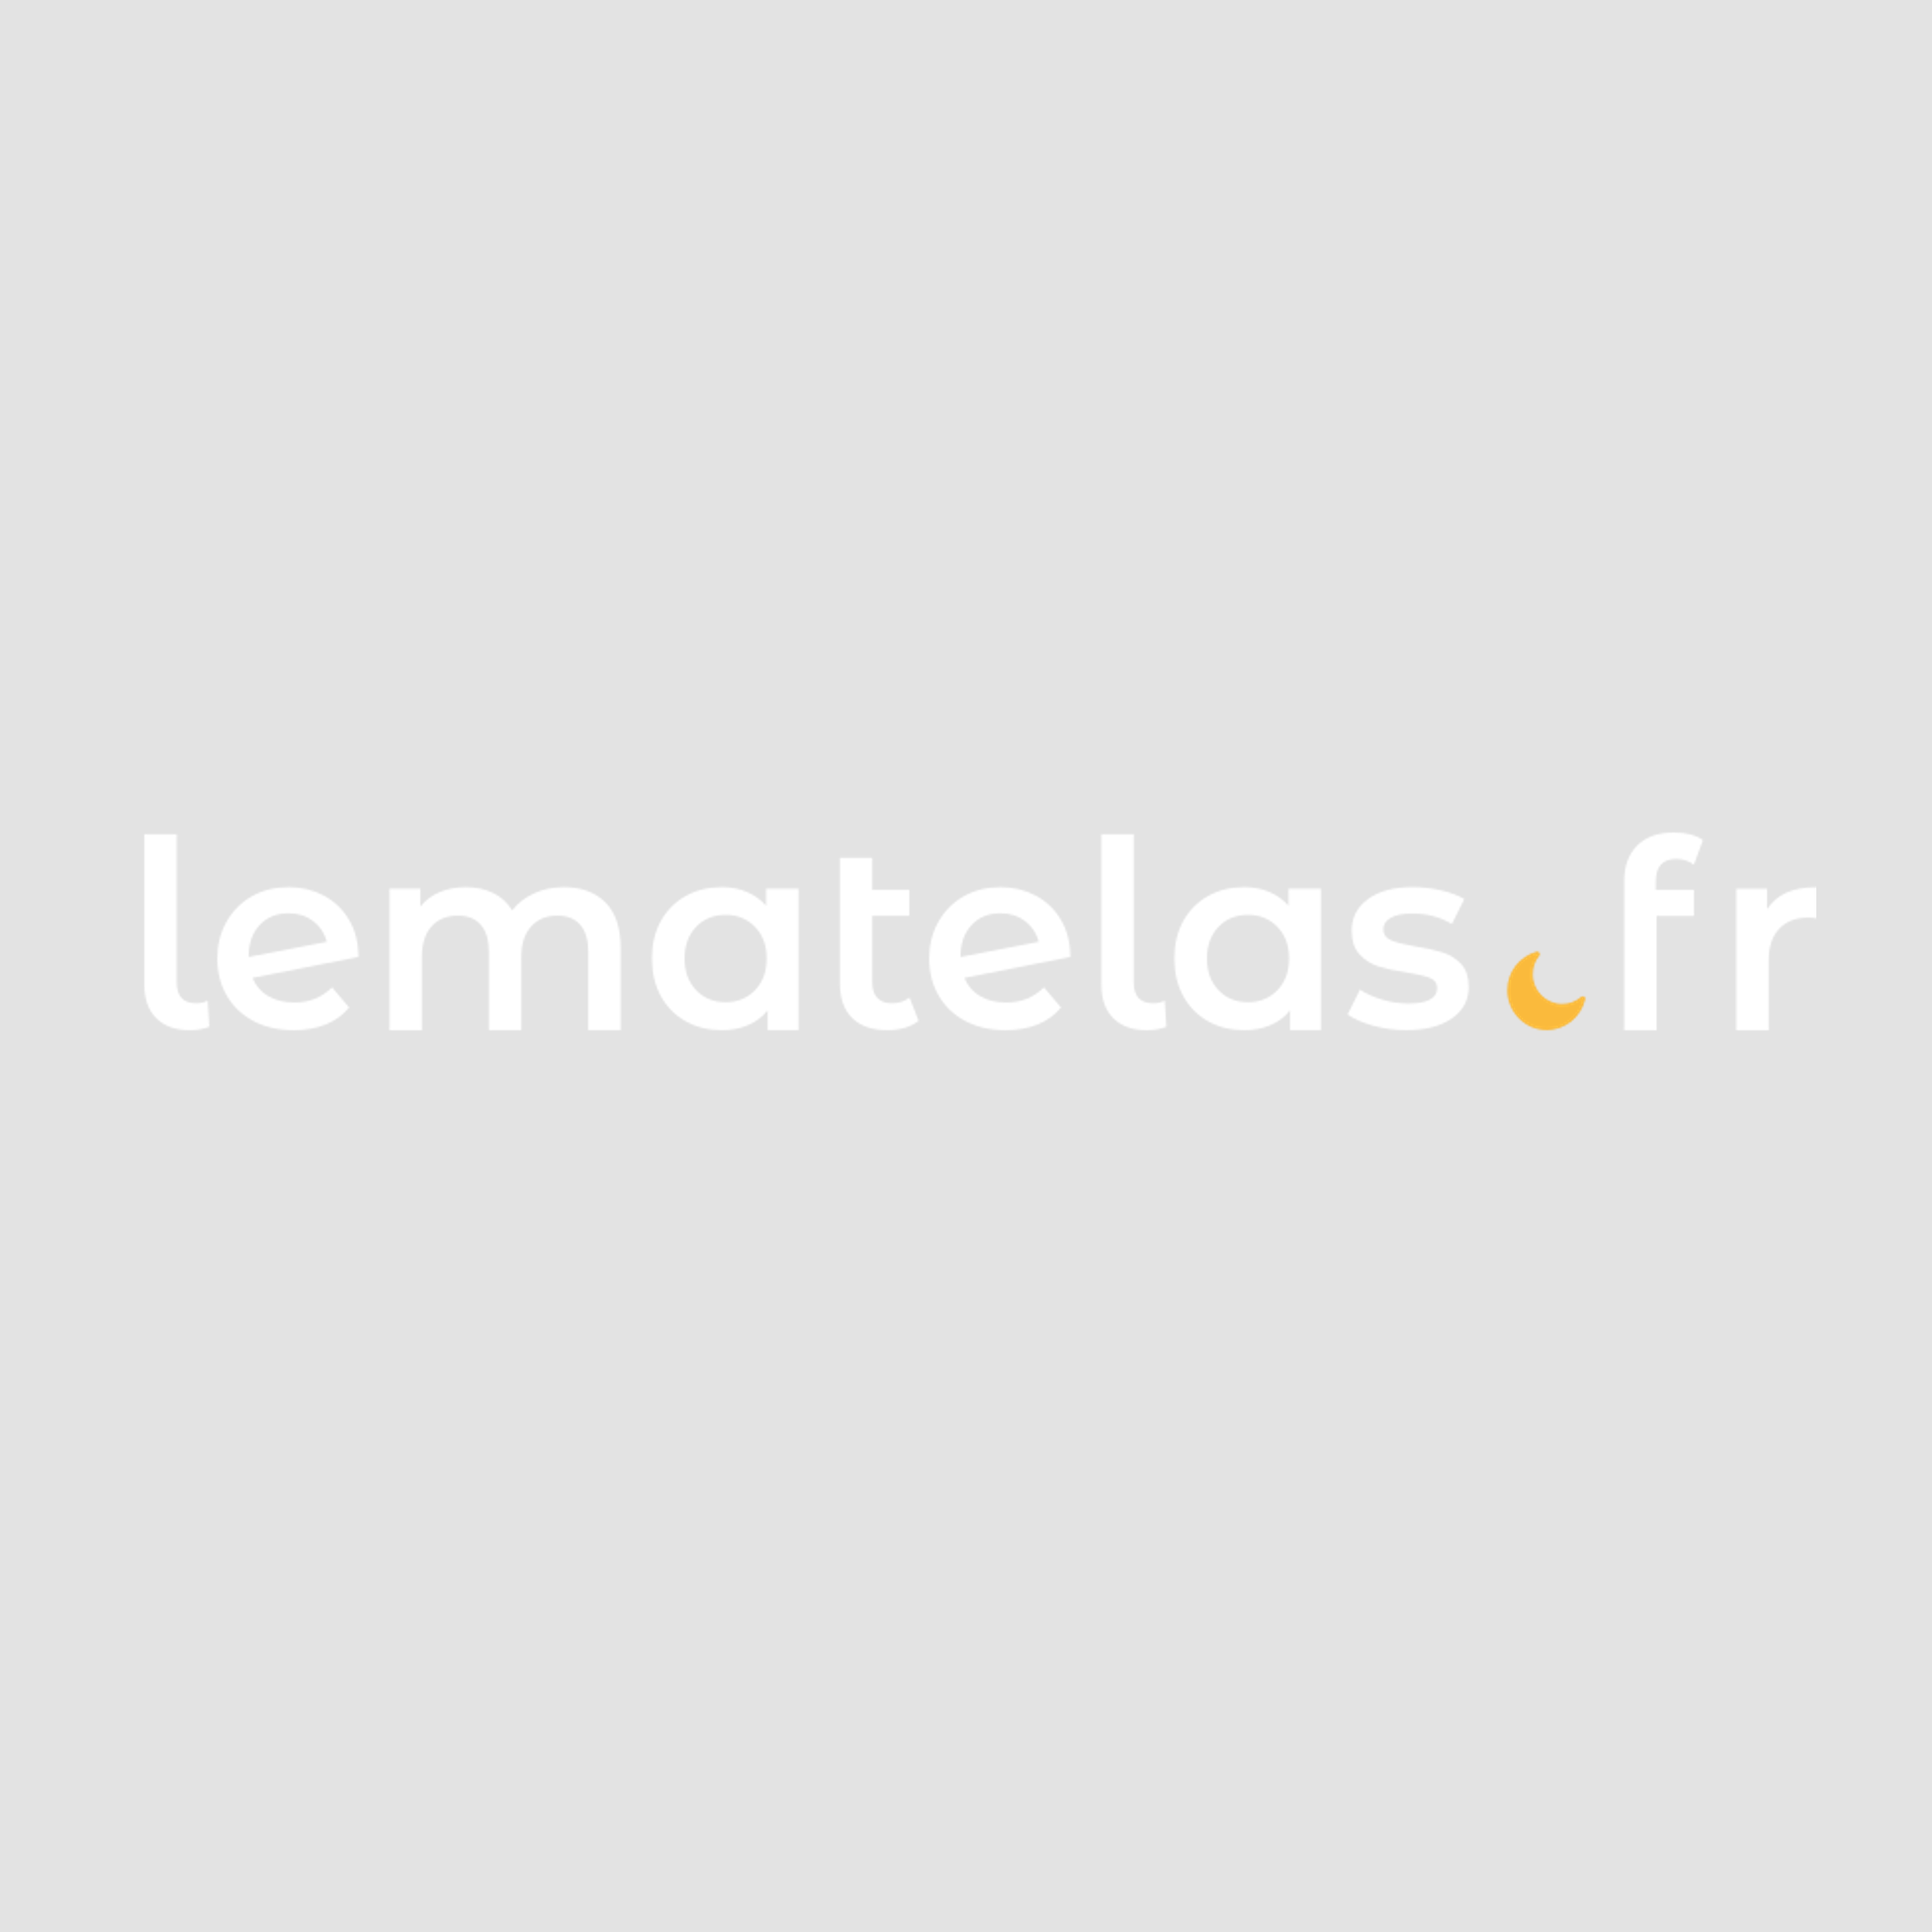 Chevets - Lematelas.fr